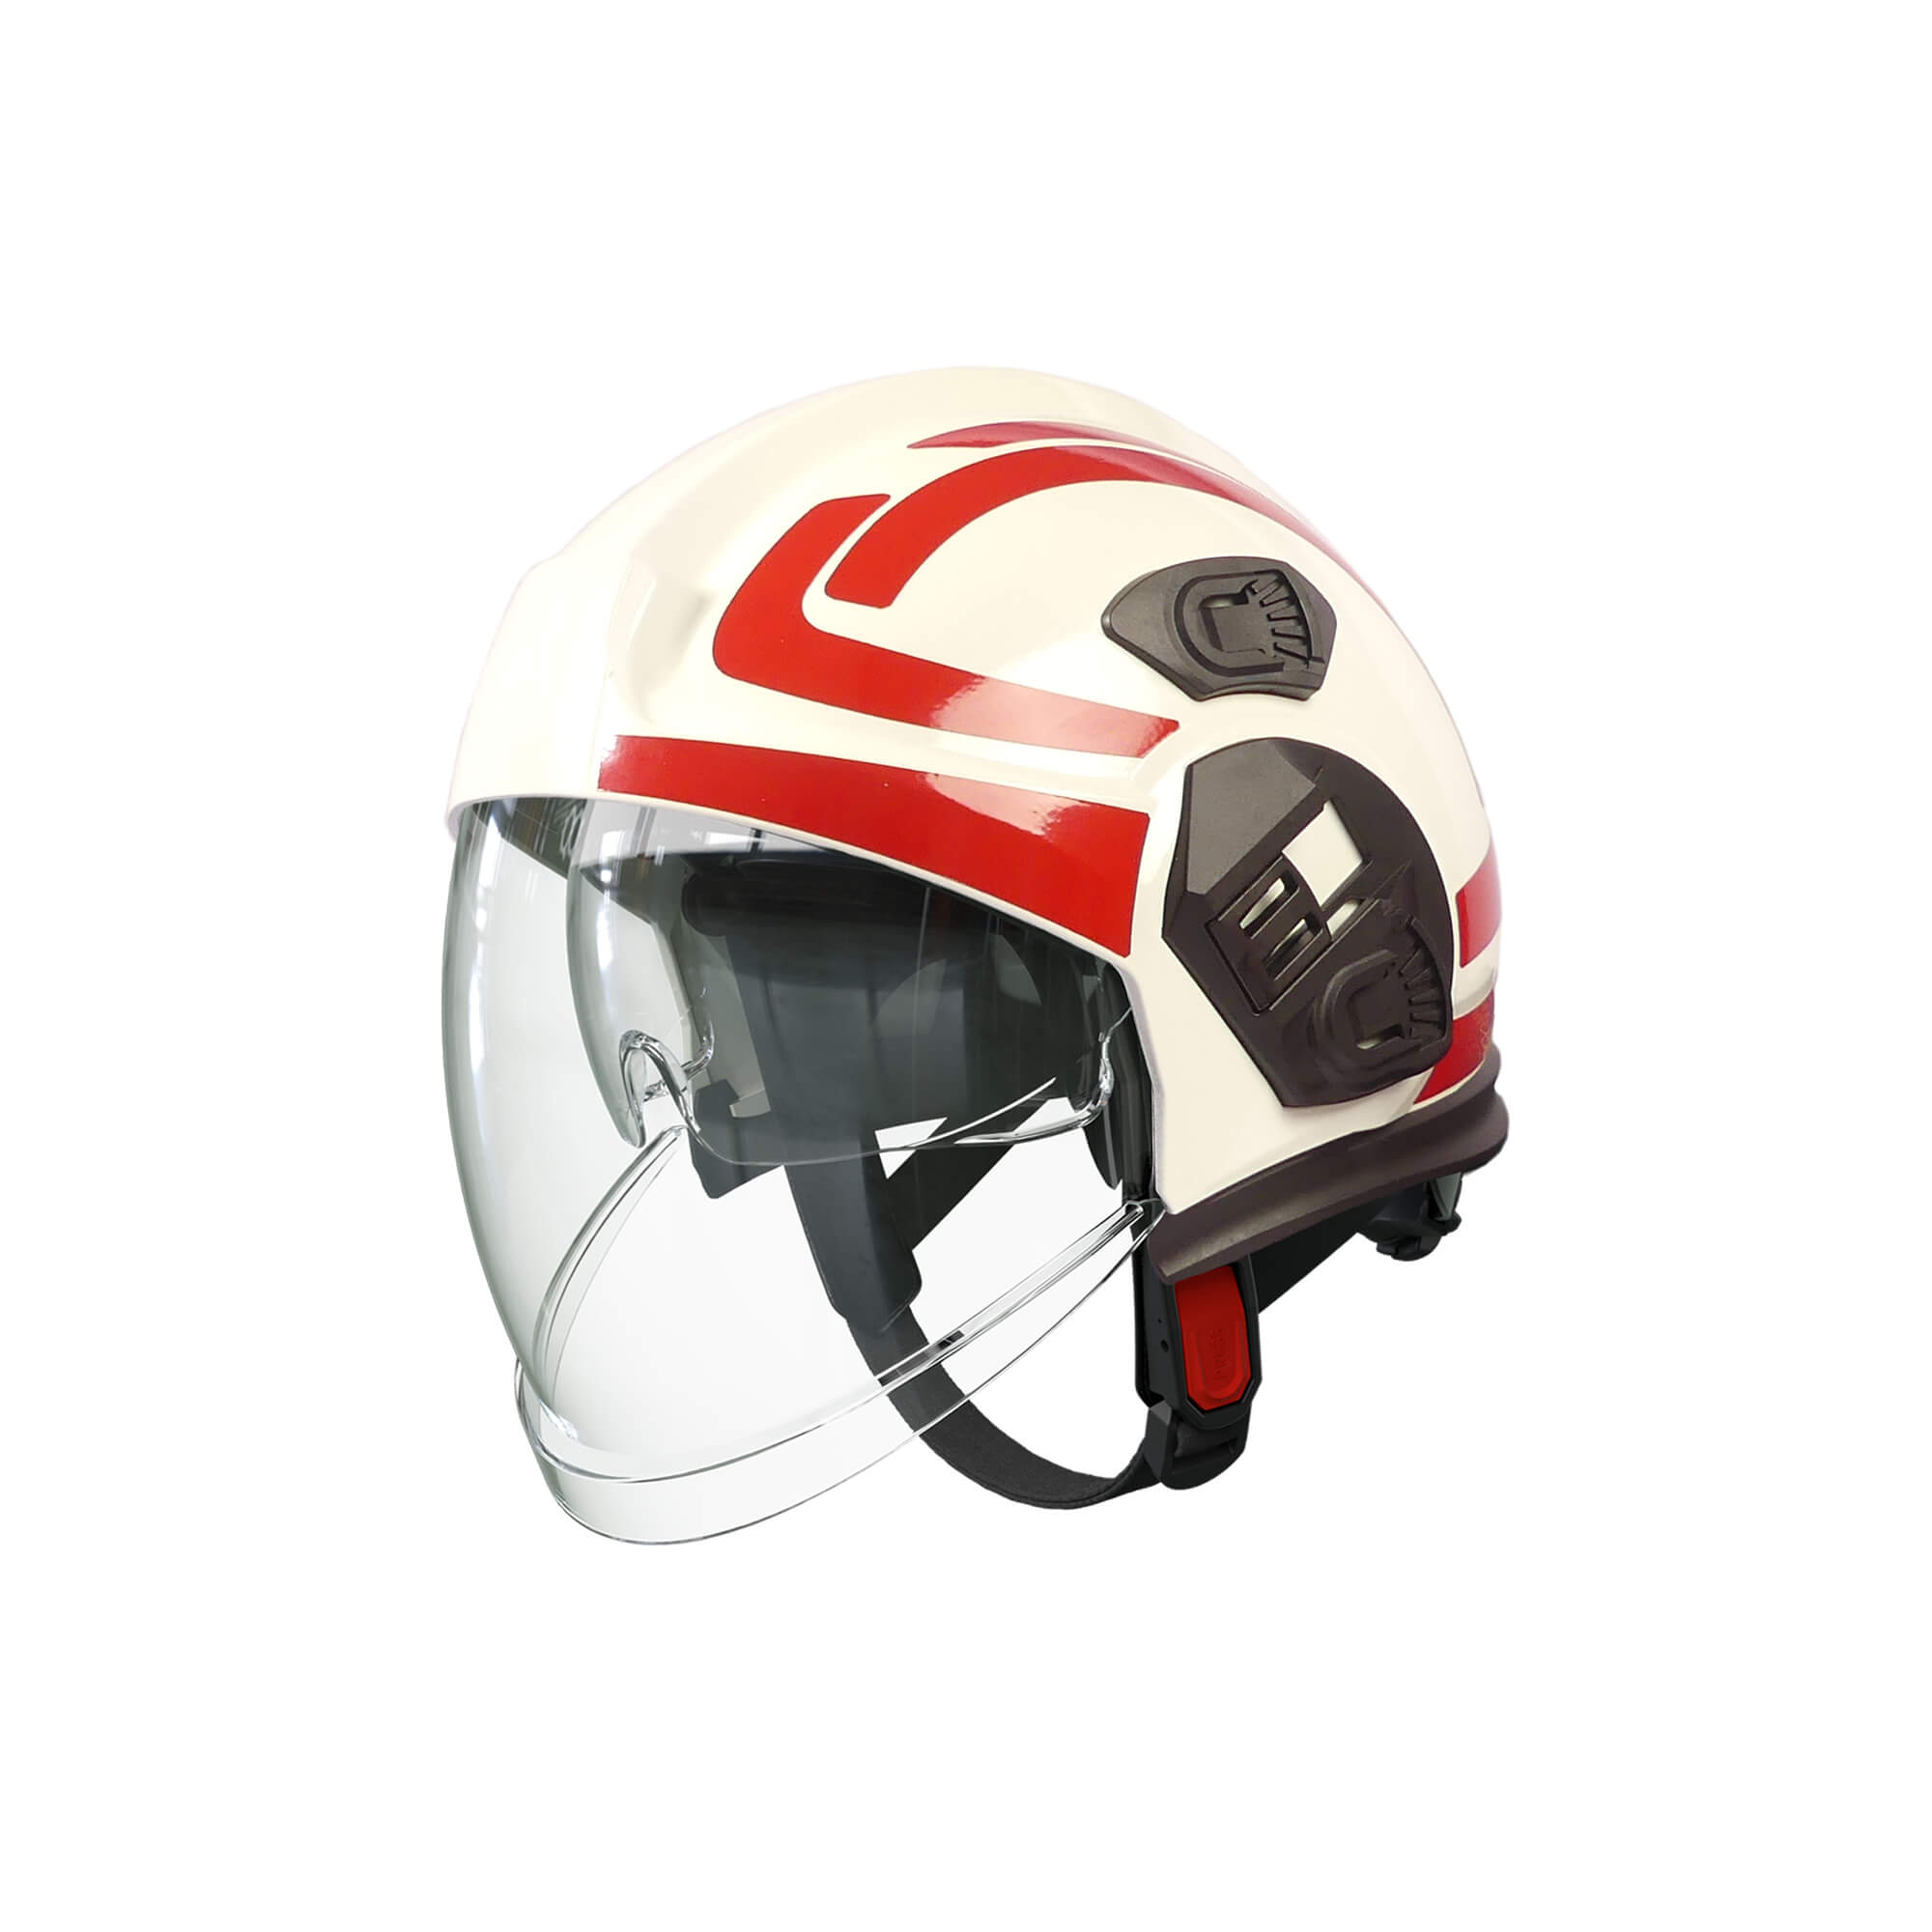 Fire helmet PAB Fire 05, Lumino RR